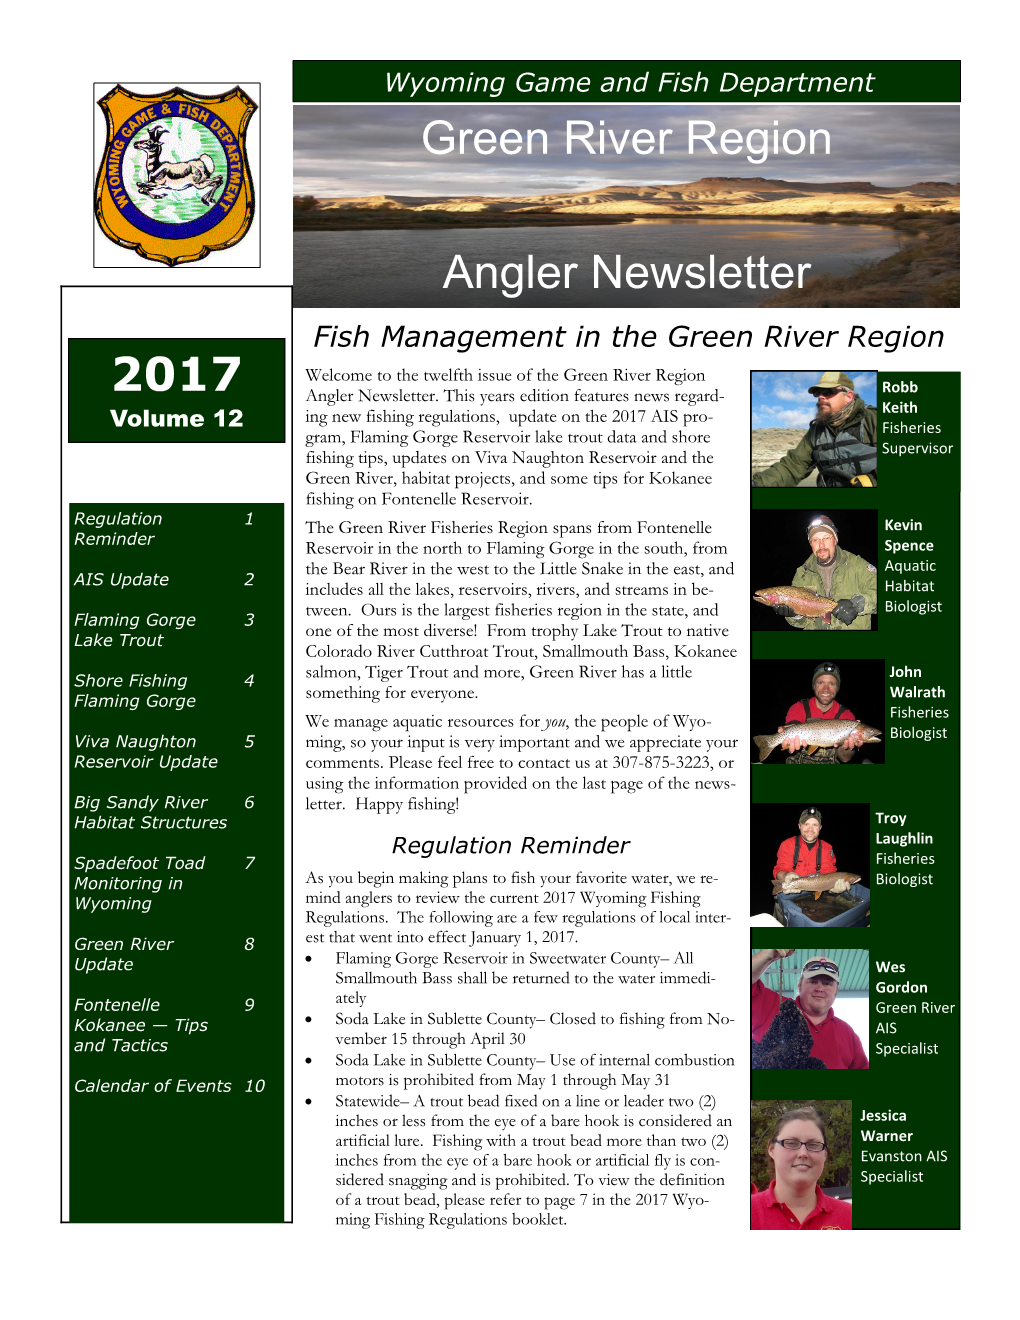 Fish Management in the Green River Region Welcome to the Twelfth Issue of the Green River Region 2017 Angler Newsletter